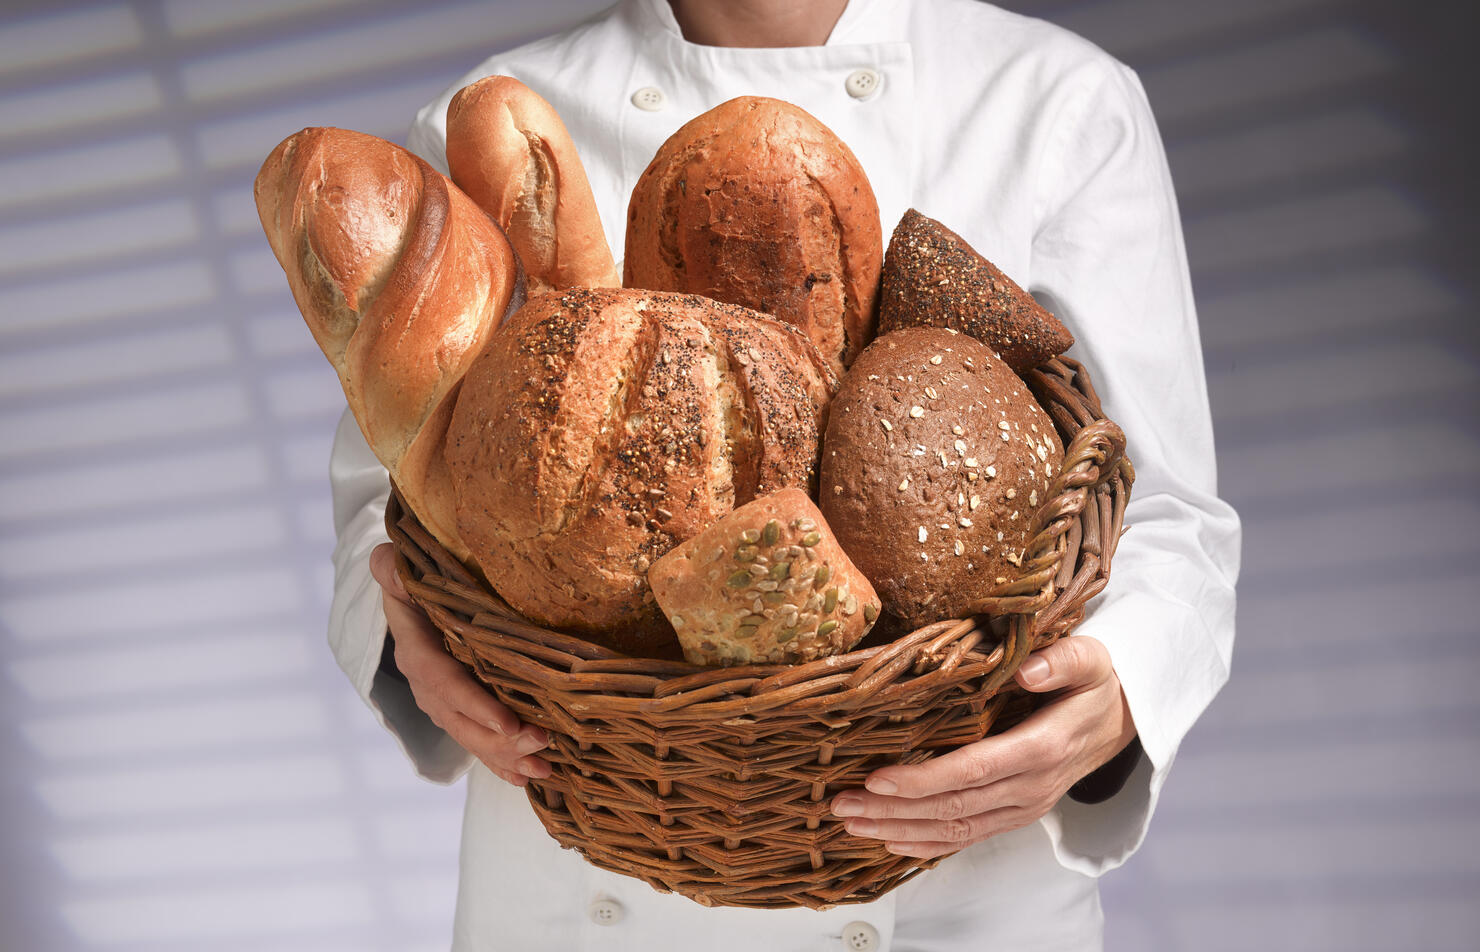 Artisanal Bread carried by junior baker